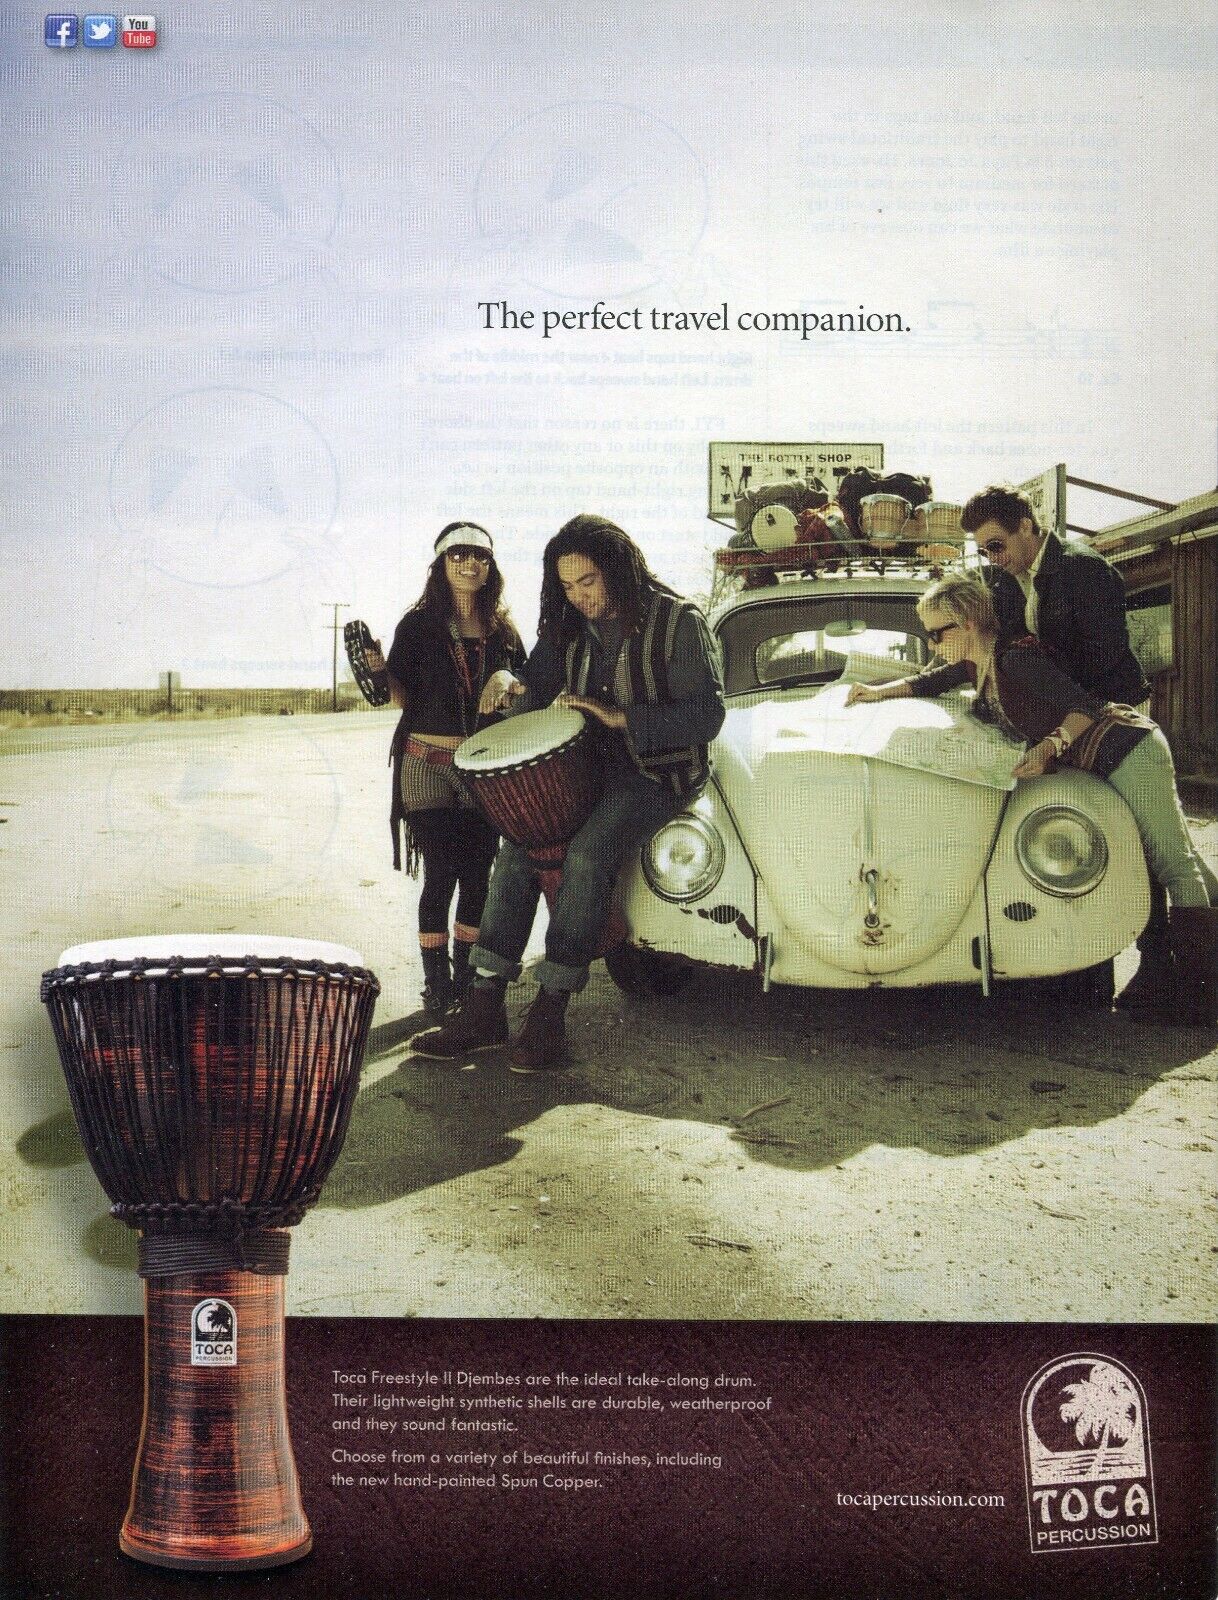 2012 Print Ad of Toca Freestyle II Djembe Spun Copper old VW Beetle Bug